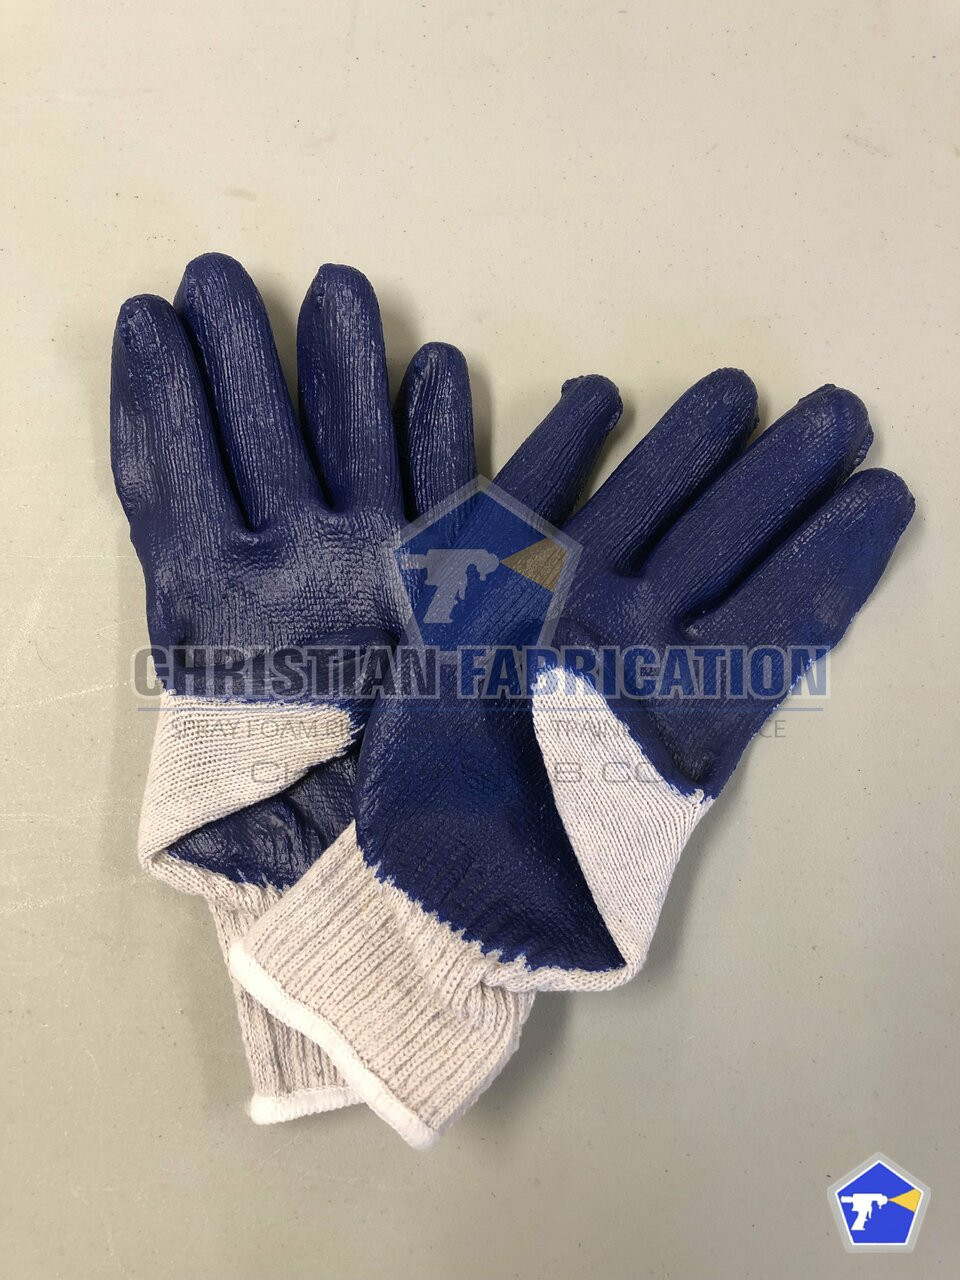 Blue palm latex coated work gloves 